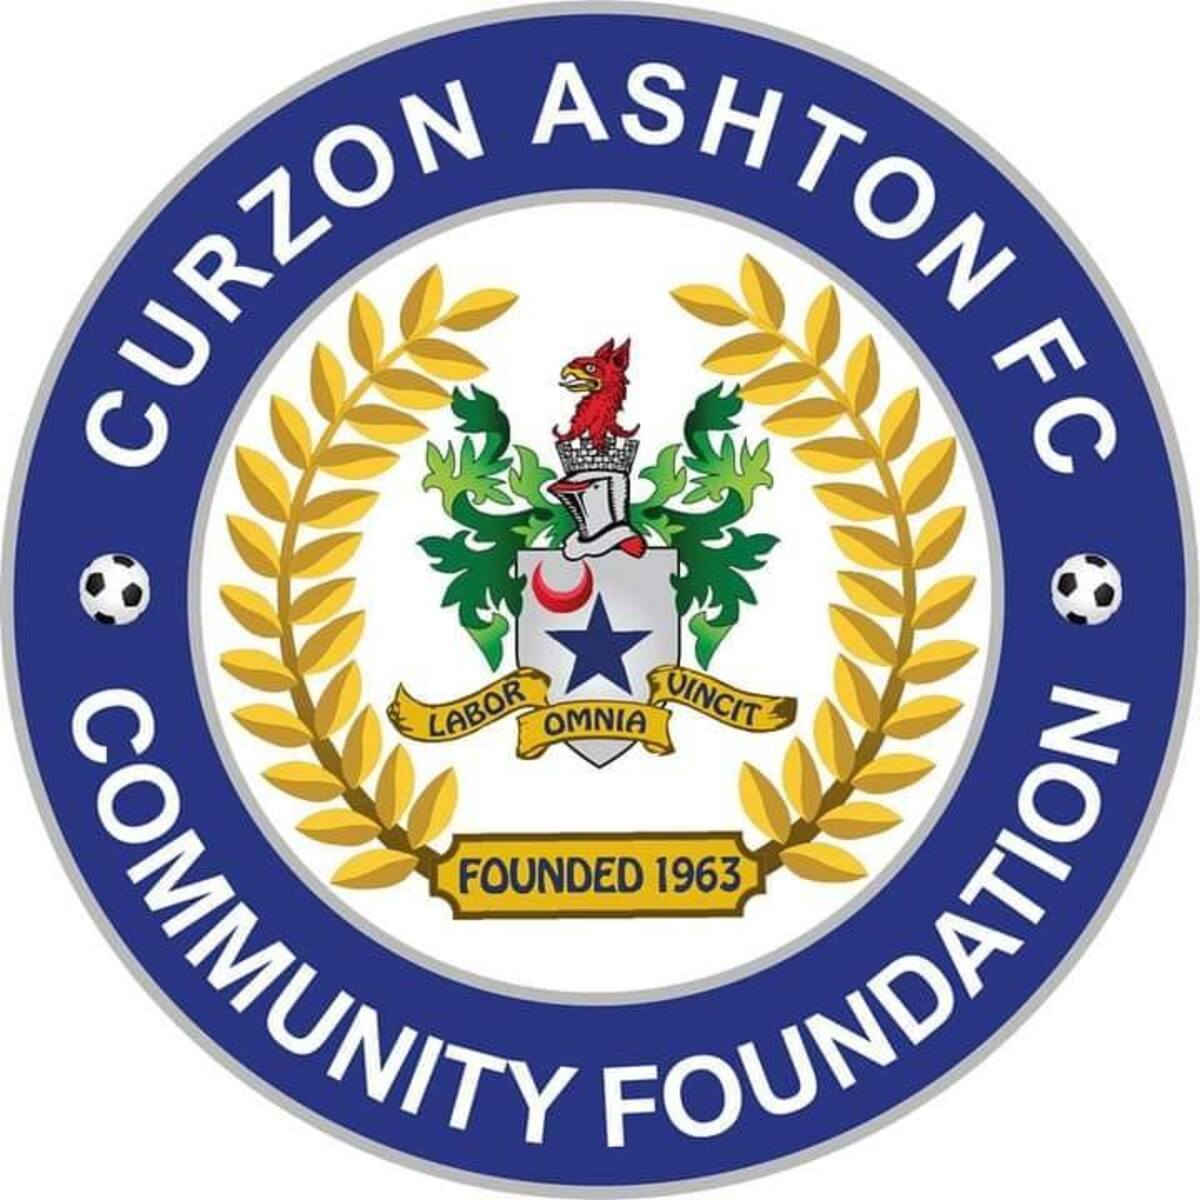 curzon-ashton-fc-24-football-club-facts